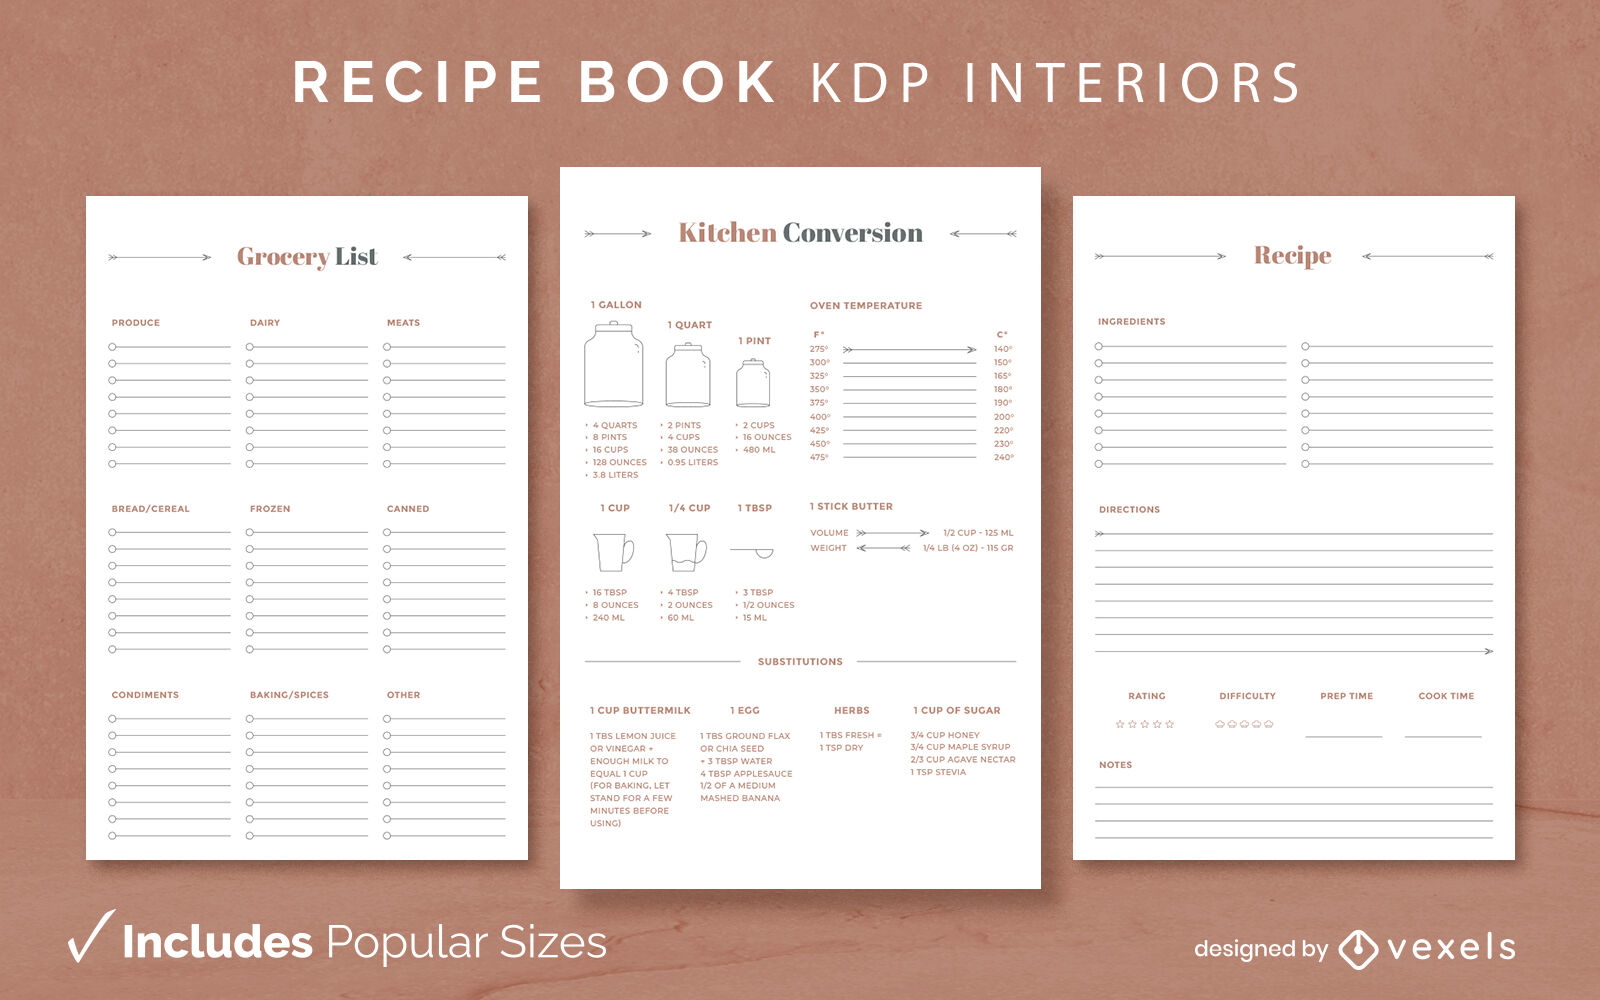 Recipe cook book template KDP interior design